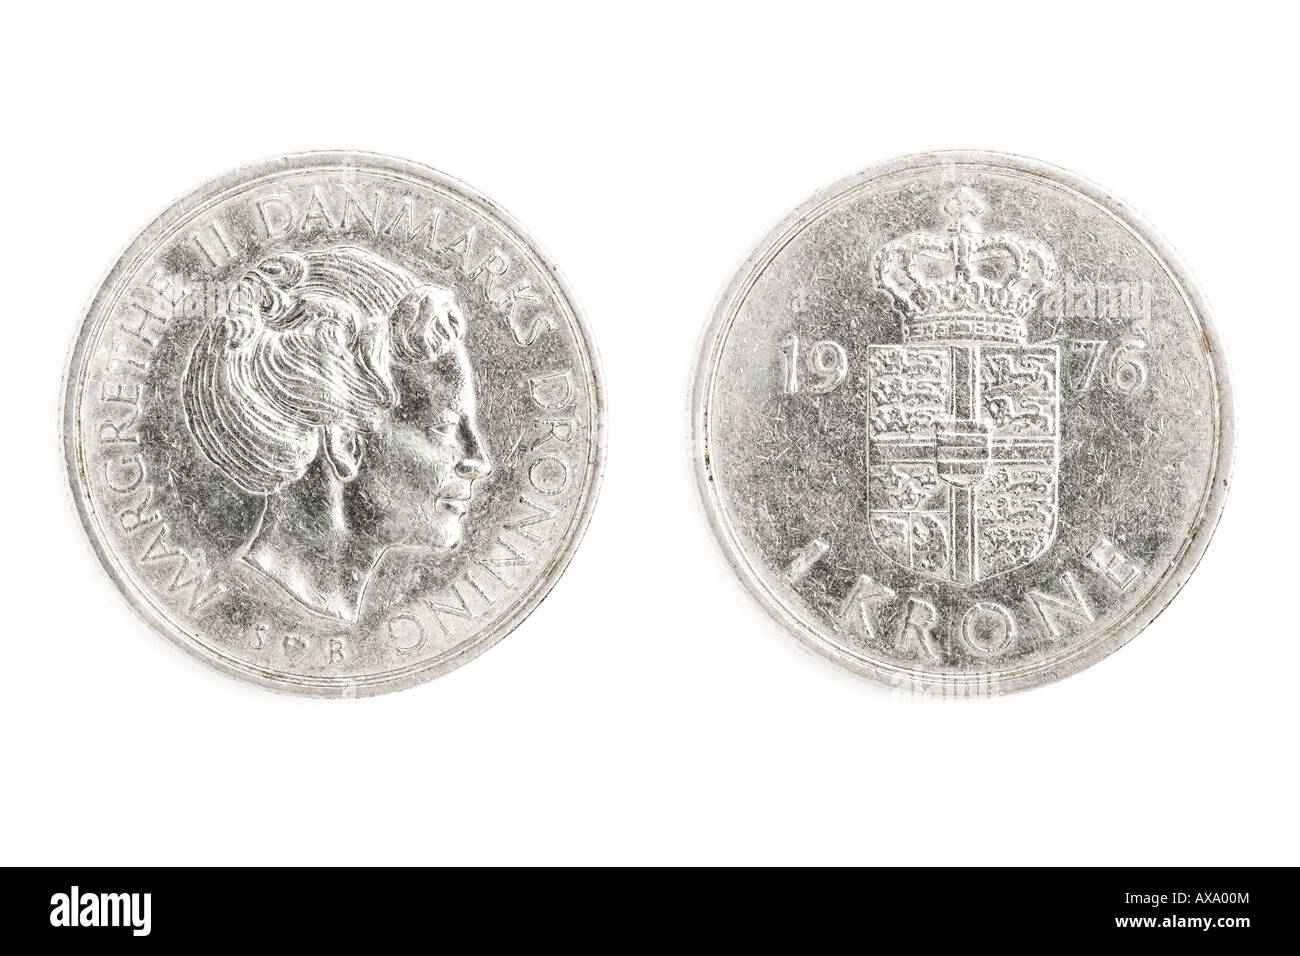 Danish One Krone Coin (1976) Stock Photo